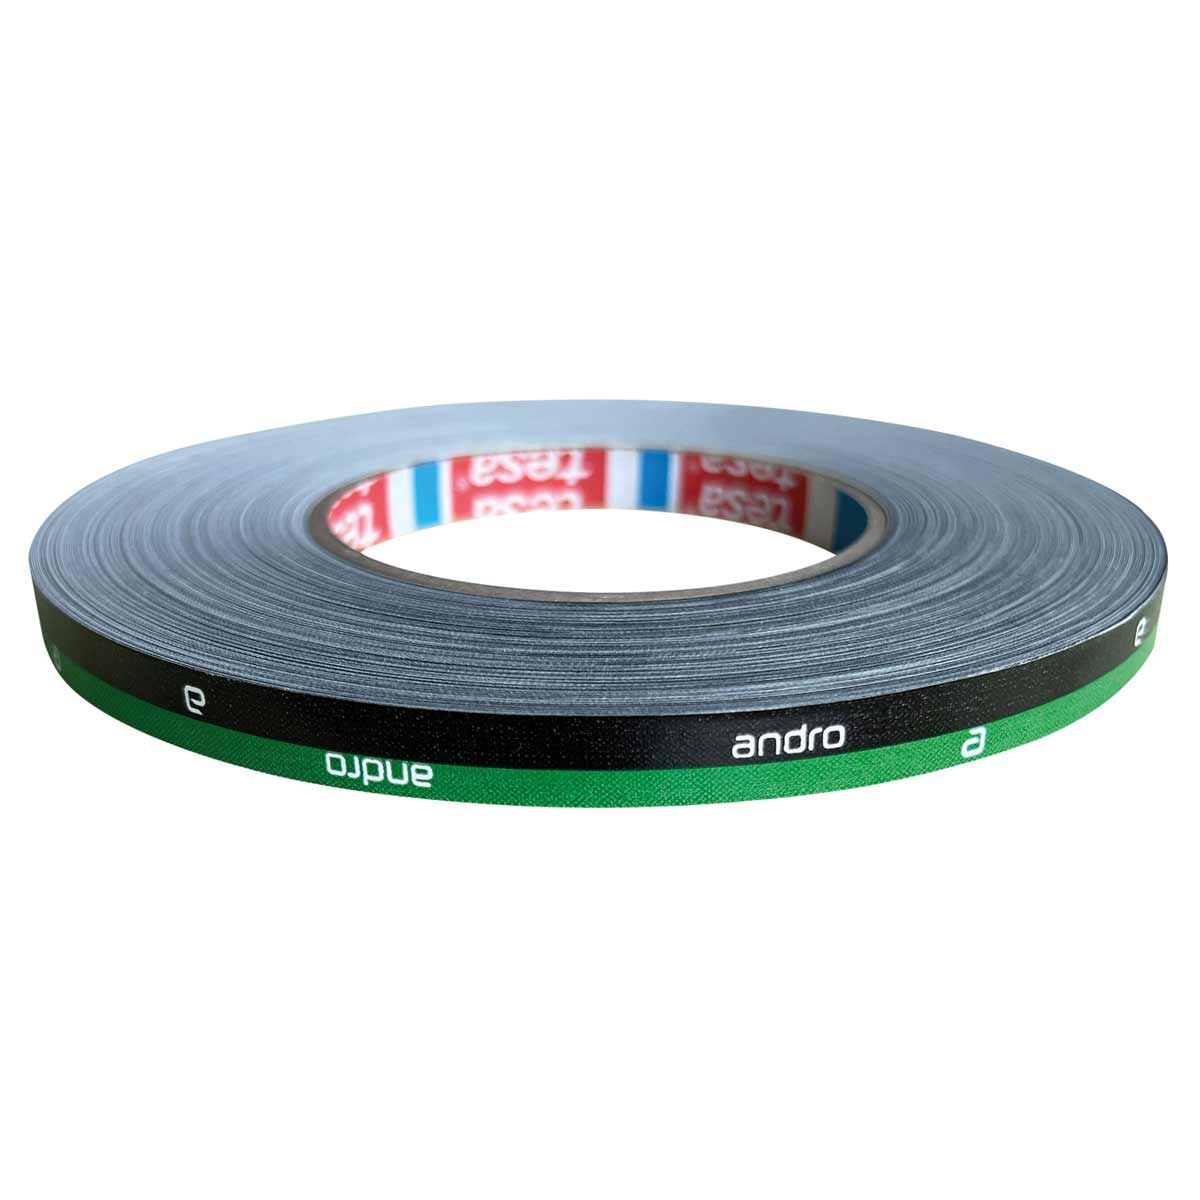 andro Kantenband Stripes 12mm/50m schwarz/grün